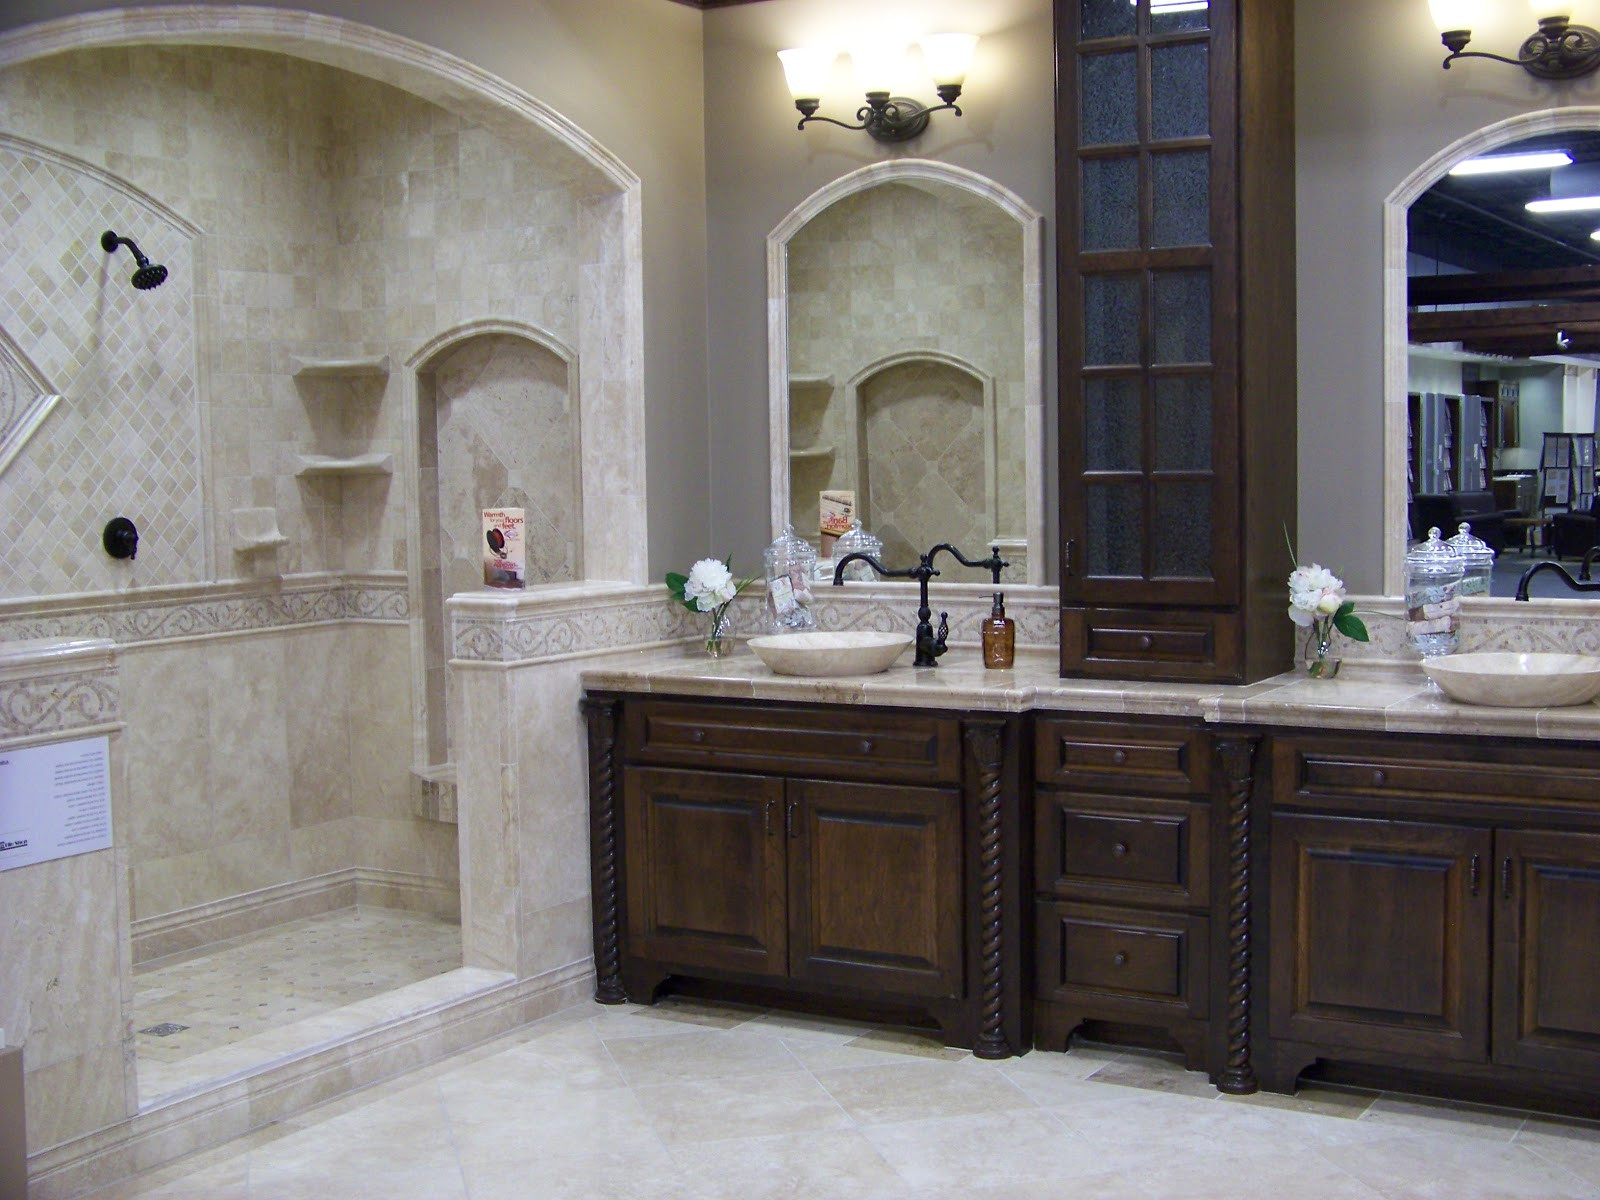 Master Bathroom Shower Tile Ideas
 Home Decor Bud ista Bathroom Inspiration The Tile Shop